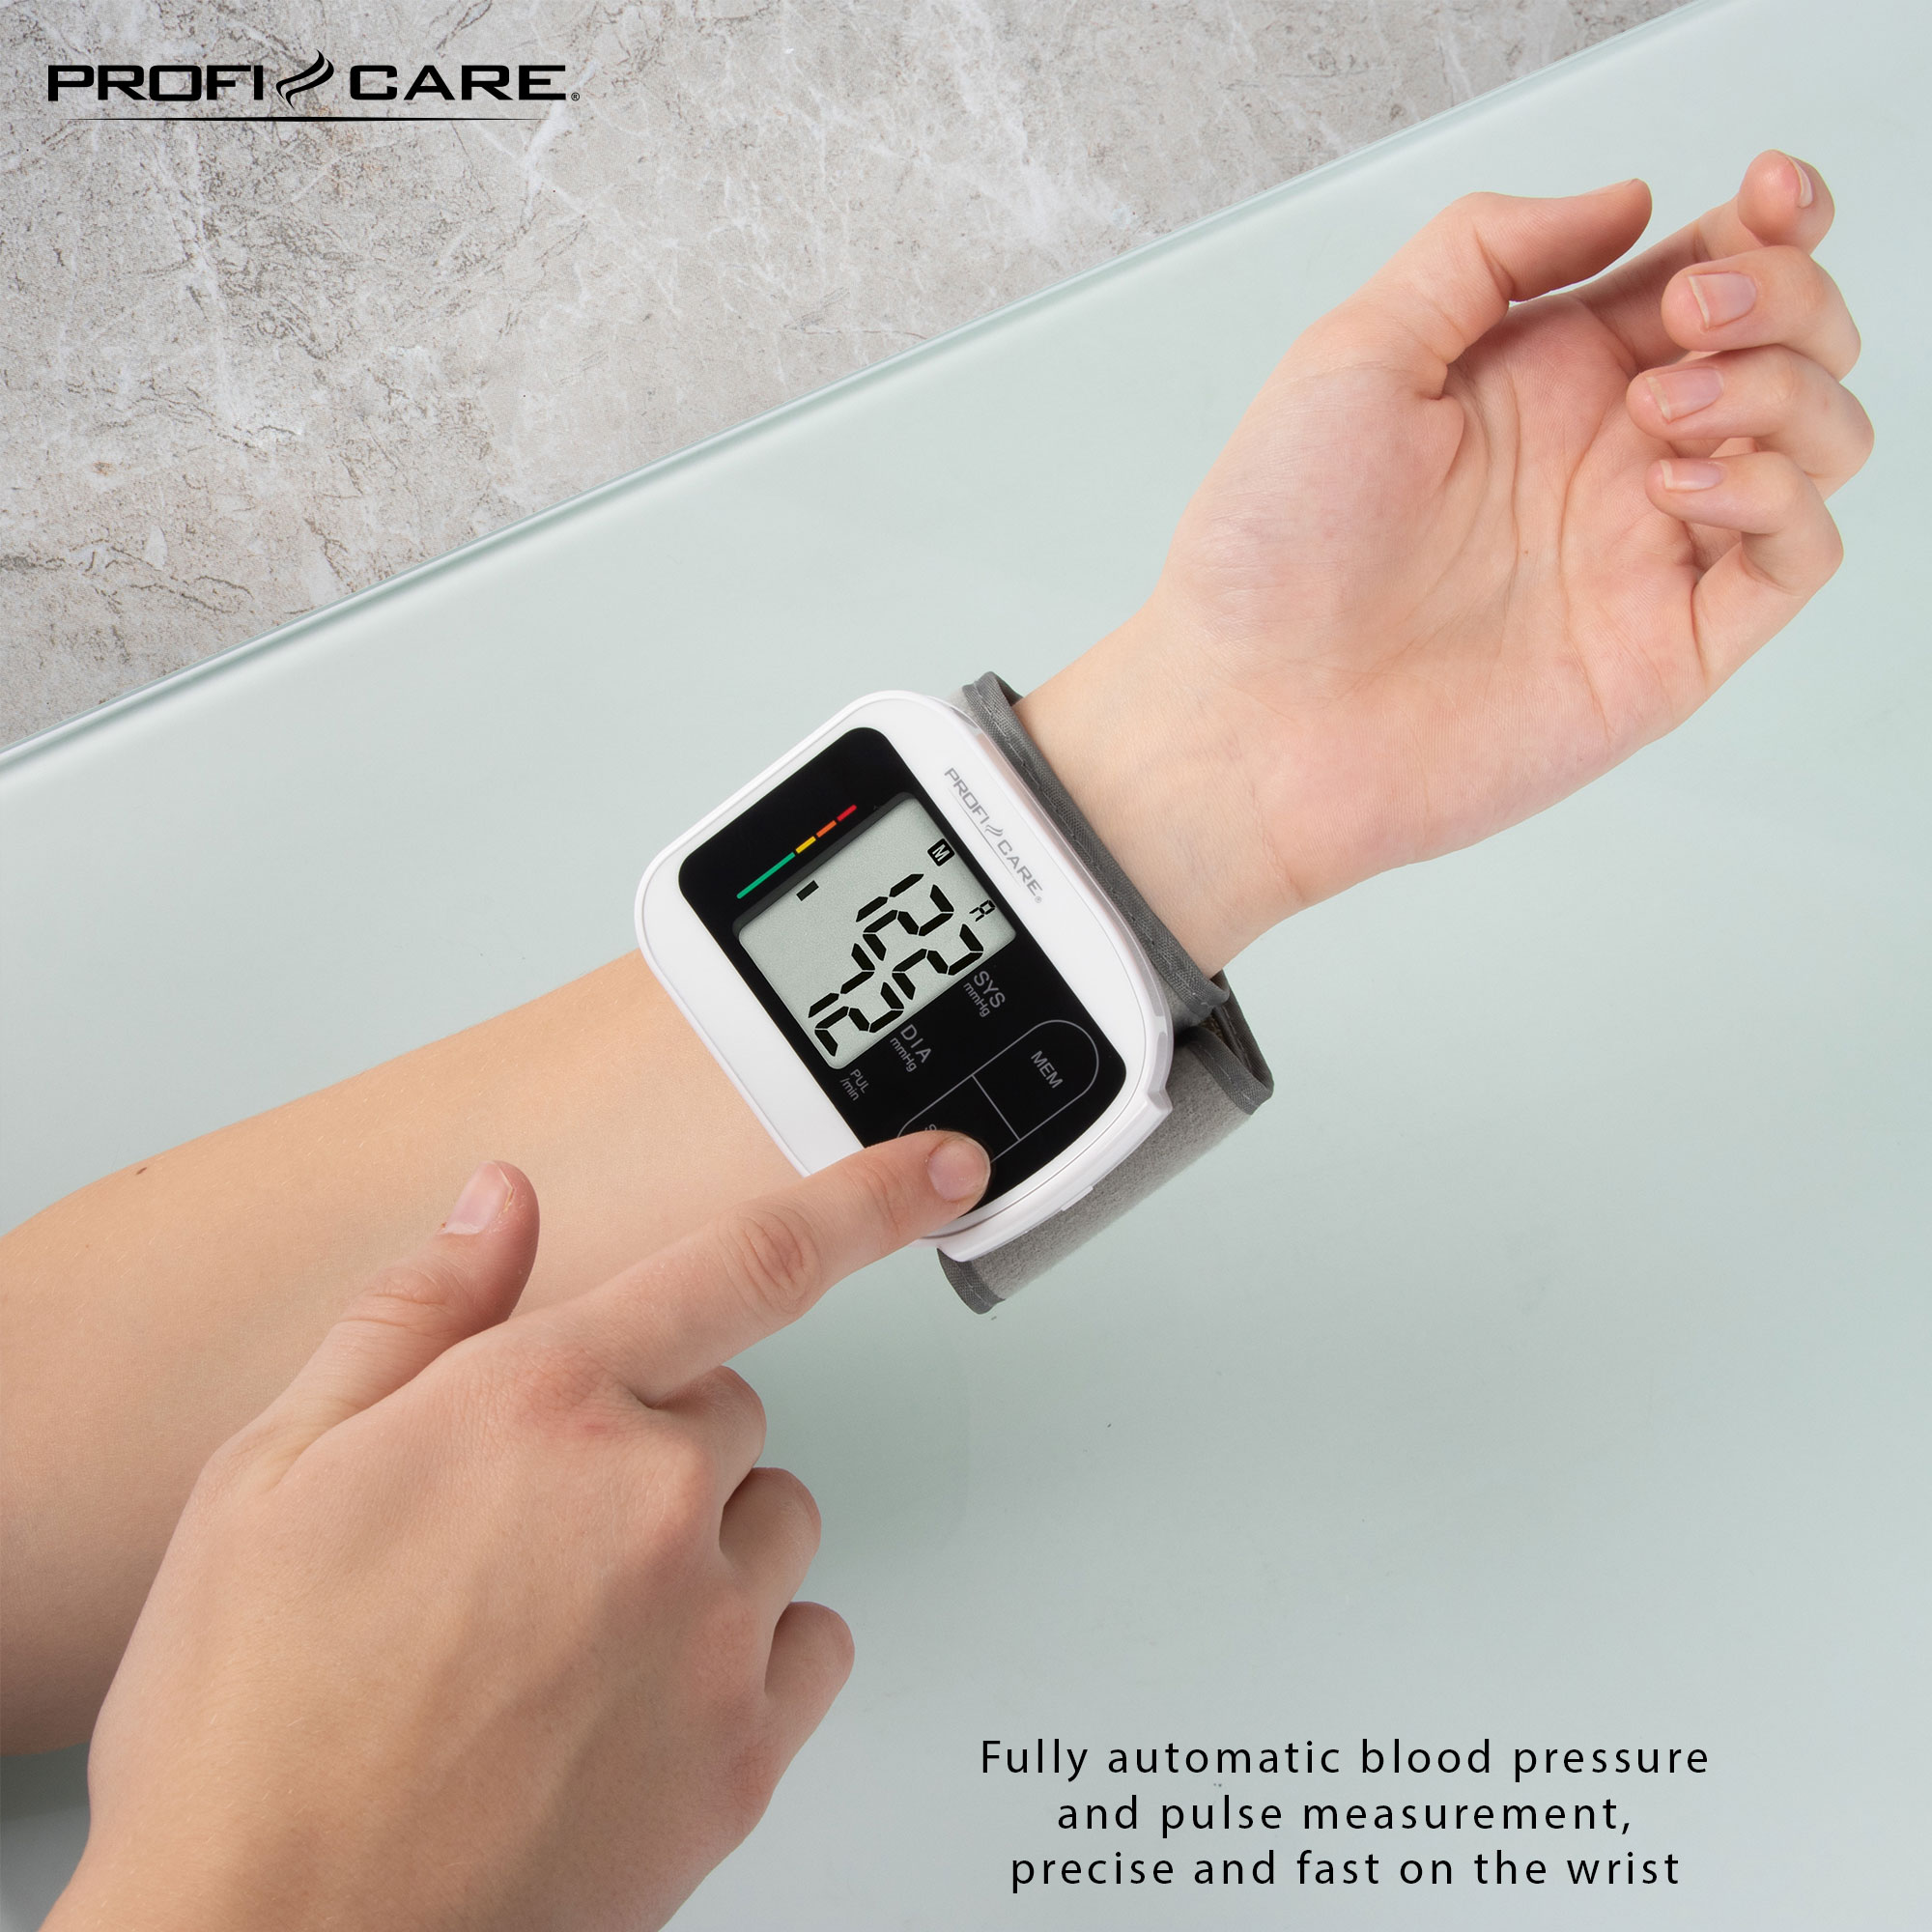 CARE Handgelenk Blutdruckmessgerät PROFI PC-BMG 3018